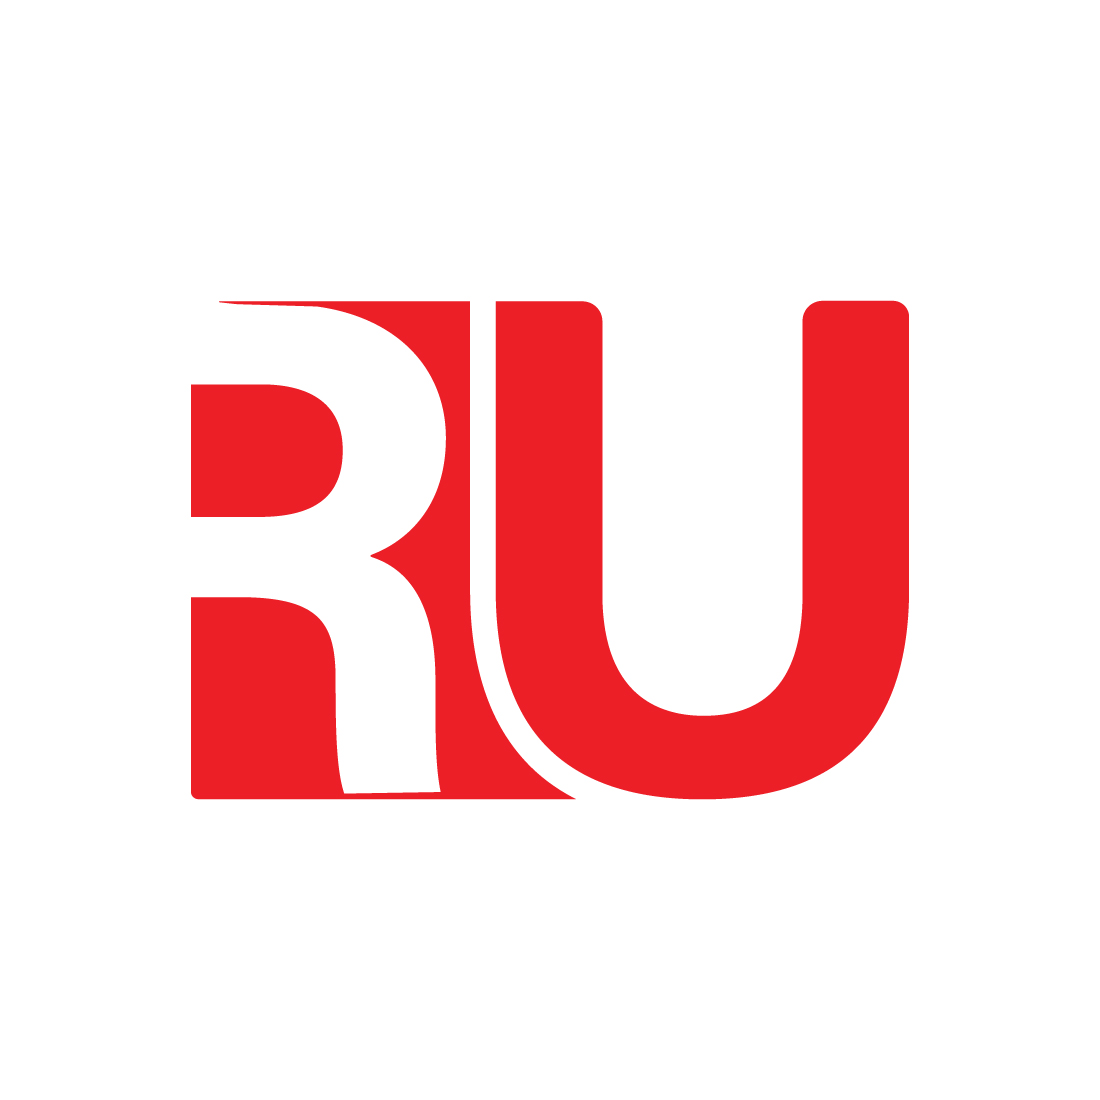 Initials RU letters logo design vector images RU logo orange and white color icon UR logo monogram best icon preview image.